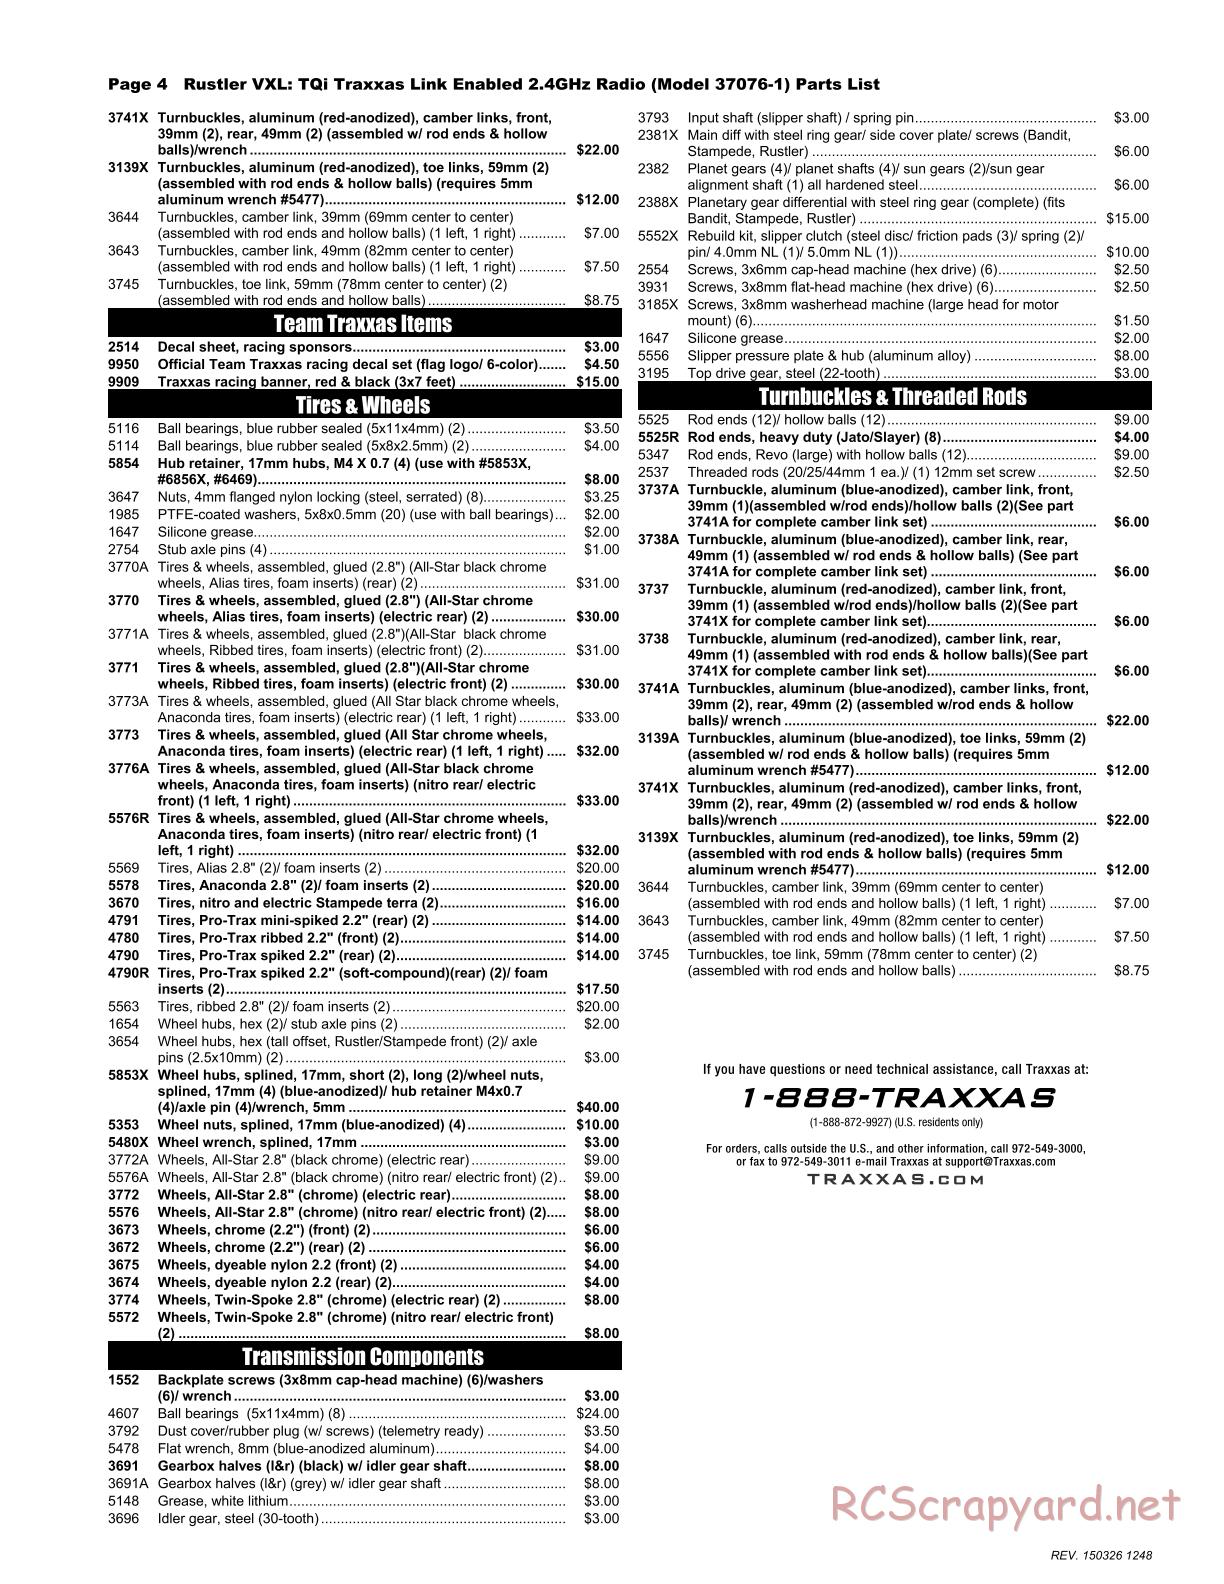 Traxxas - Rustler VXL (2015) - Parts List - Page 4